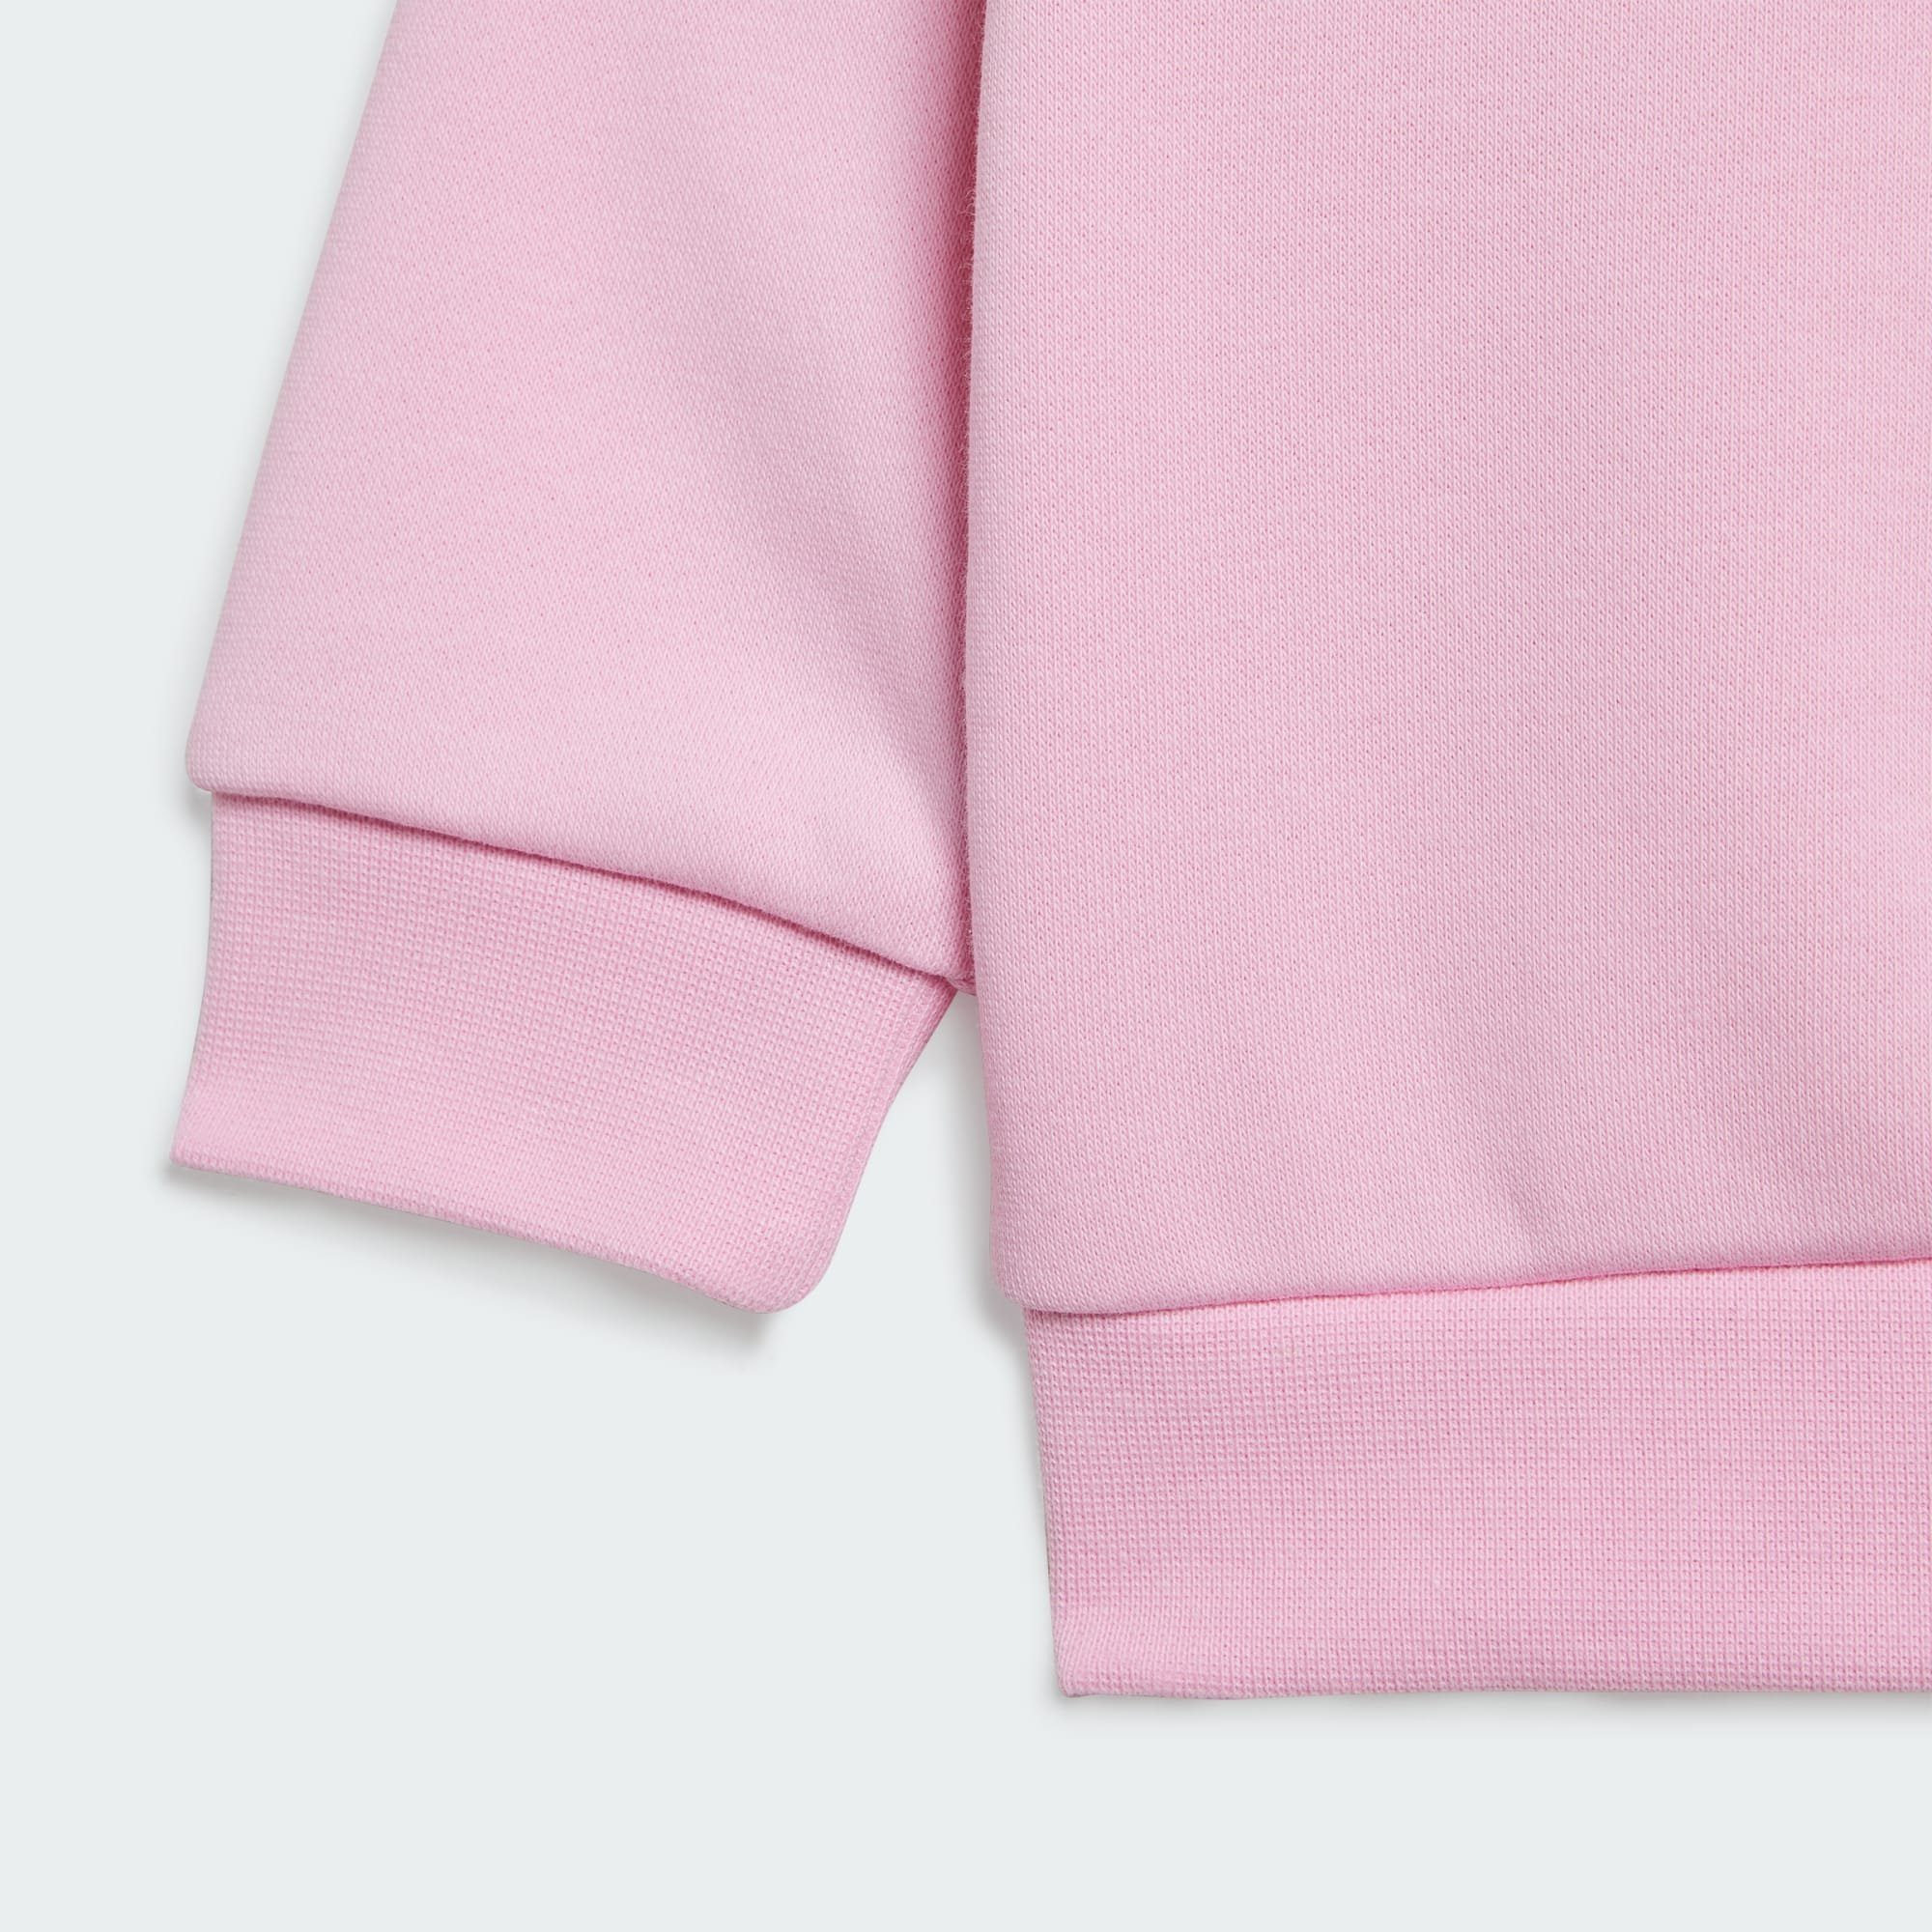 adidas Originals Trainingsanzug True ADICOLOR Pink SET